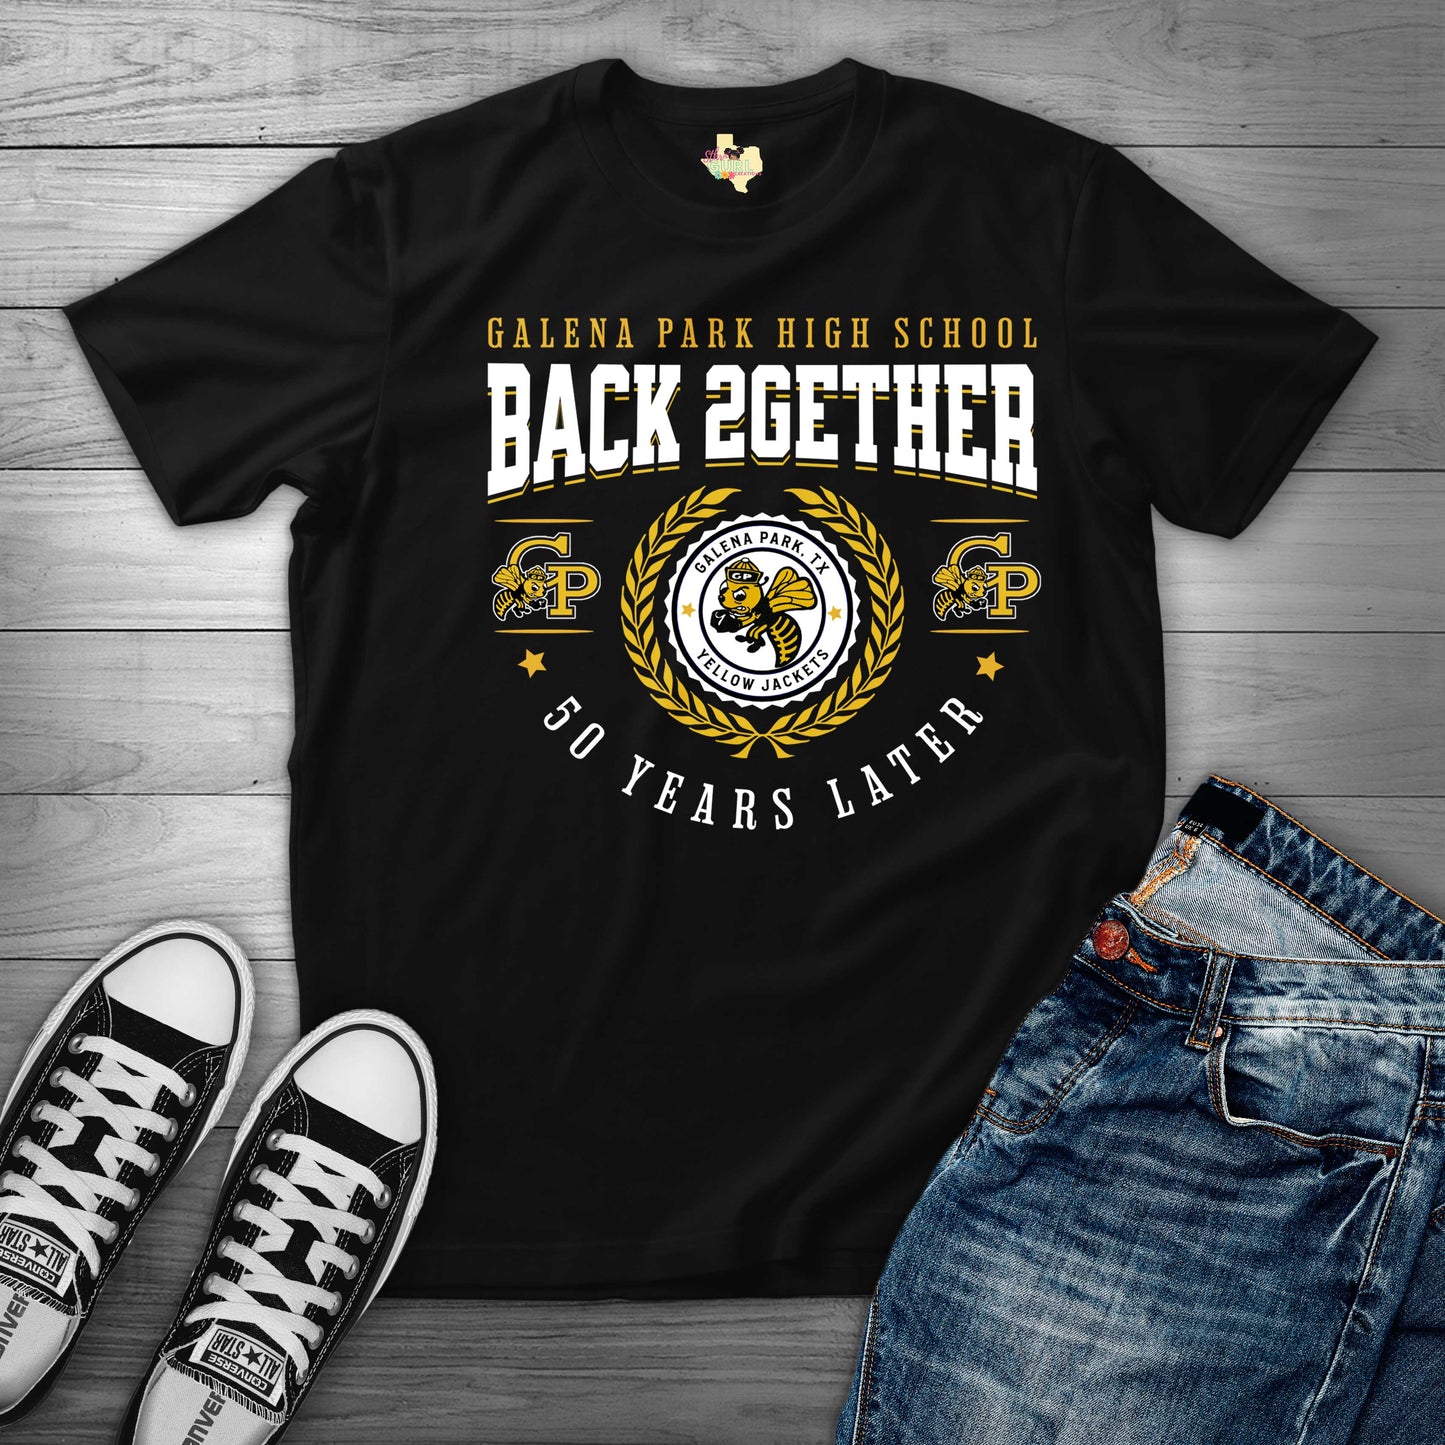 Galena Park High School 50 Year Reunion T-Shirt